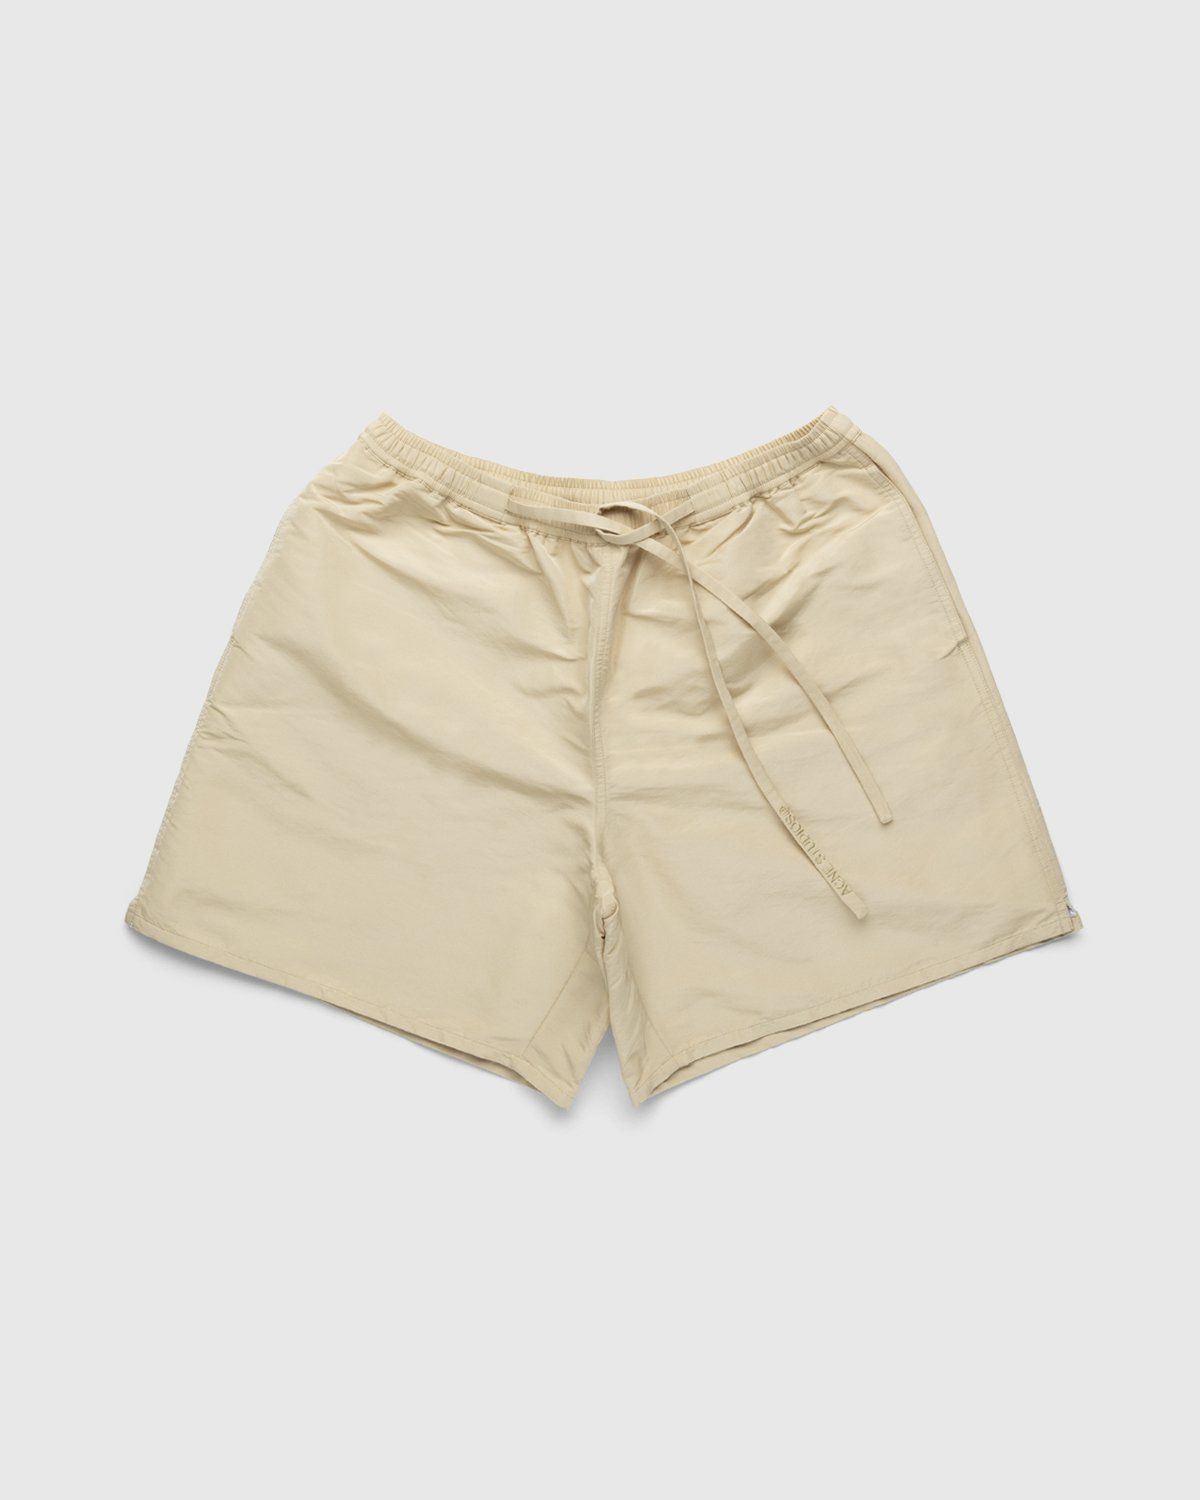 Acne Studios – Taffeta Shorts Sand Beige - Active Shorts - Beige - Image 1